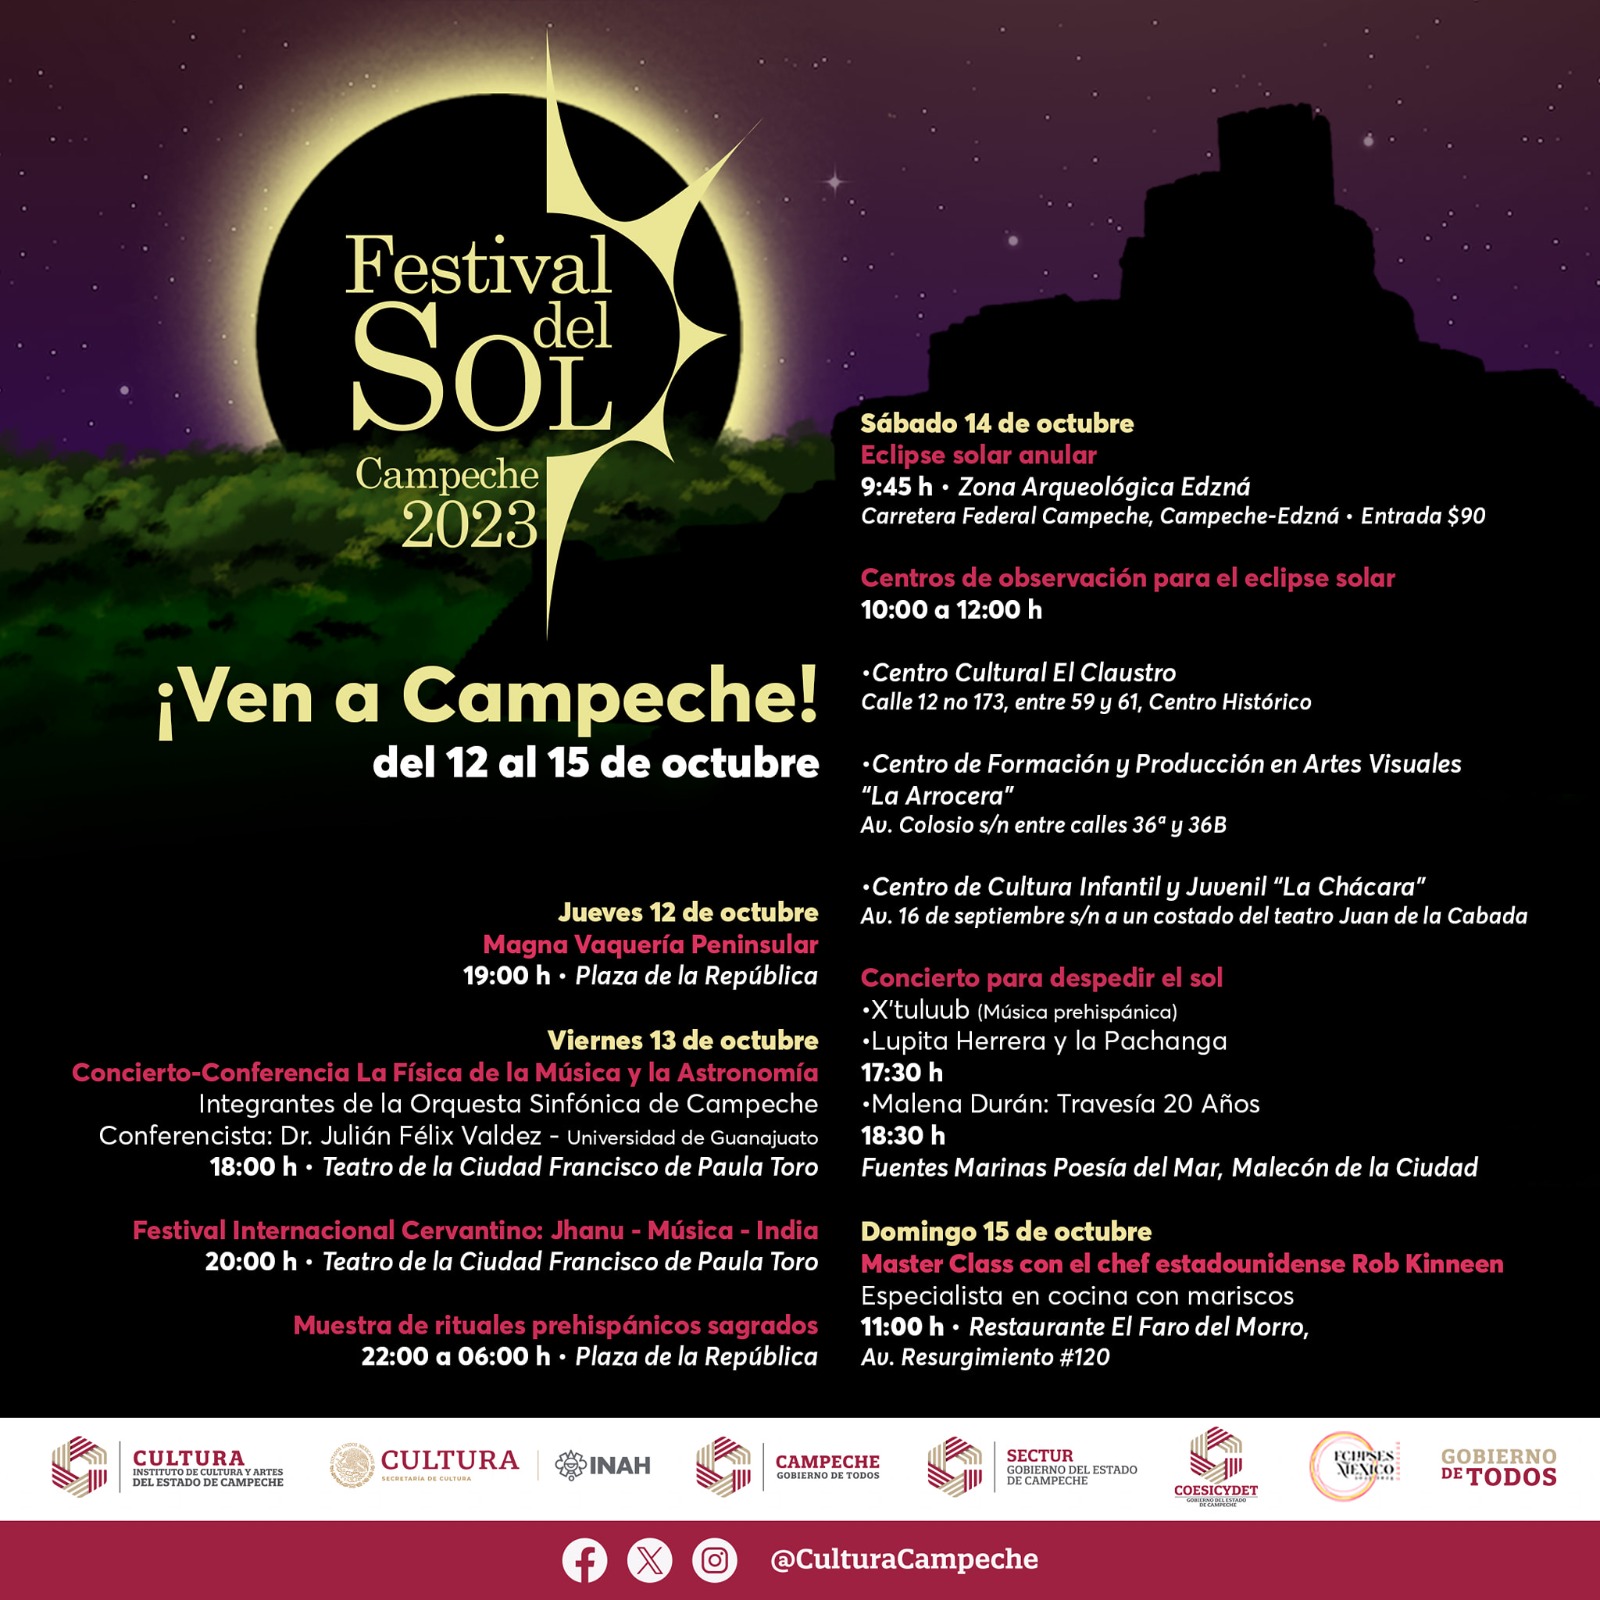 Festival del Sol en Campeche